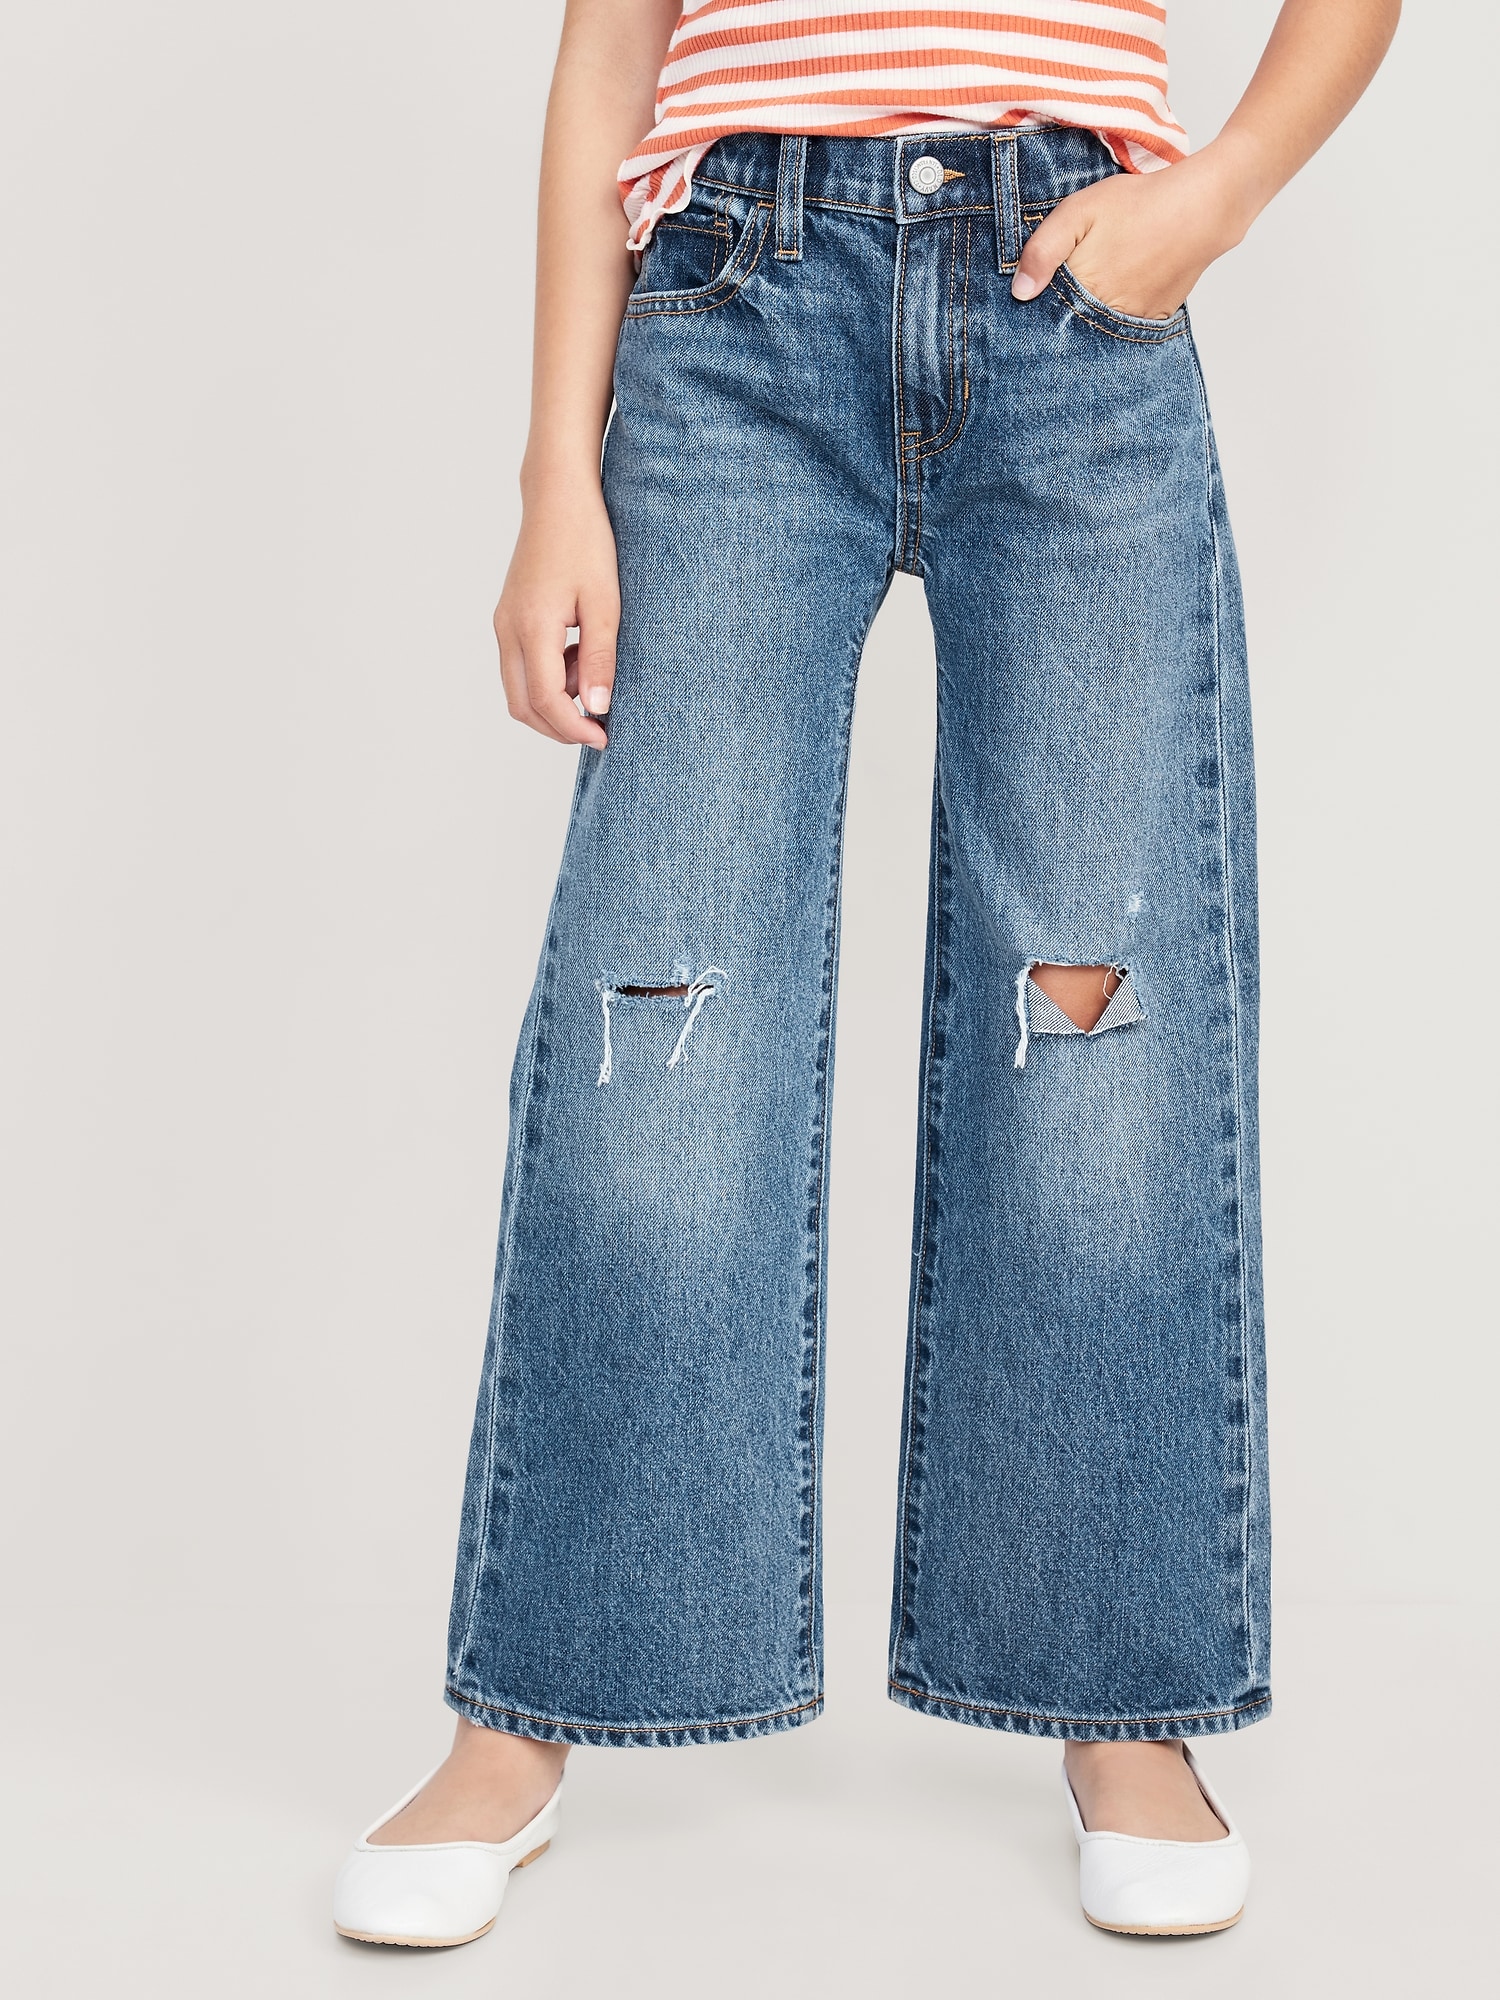  Viatabuna Baggy Jeans for Girls Kids Wide Leg High Waistes  Trendy Jeans Cute Regular Fit Denim Pants: Clothing, Shoes & Jewelry